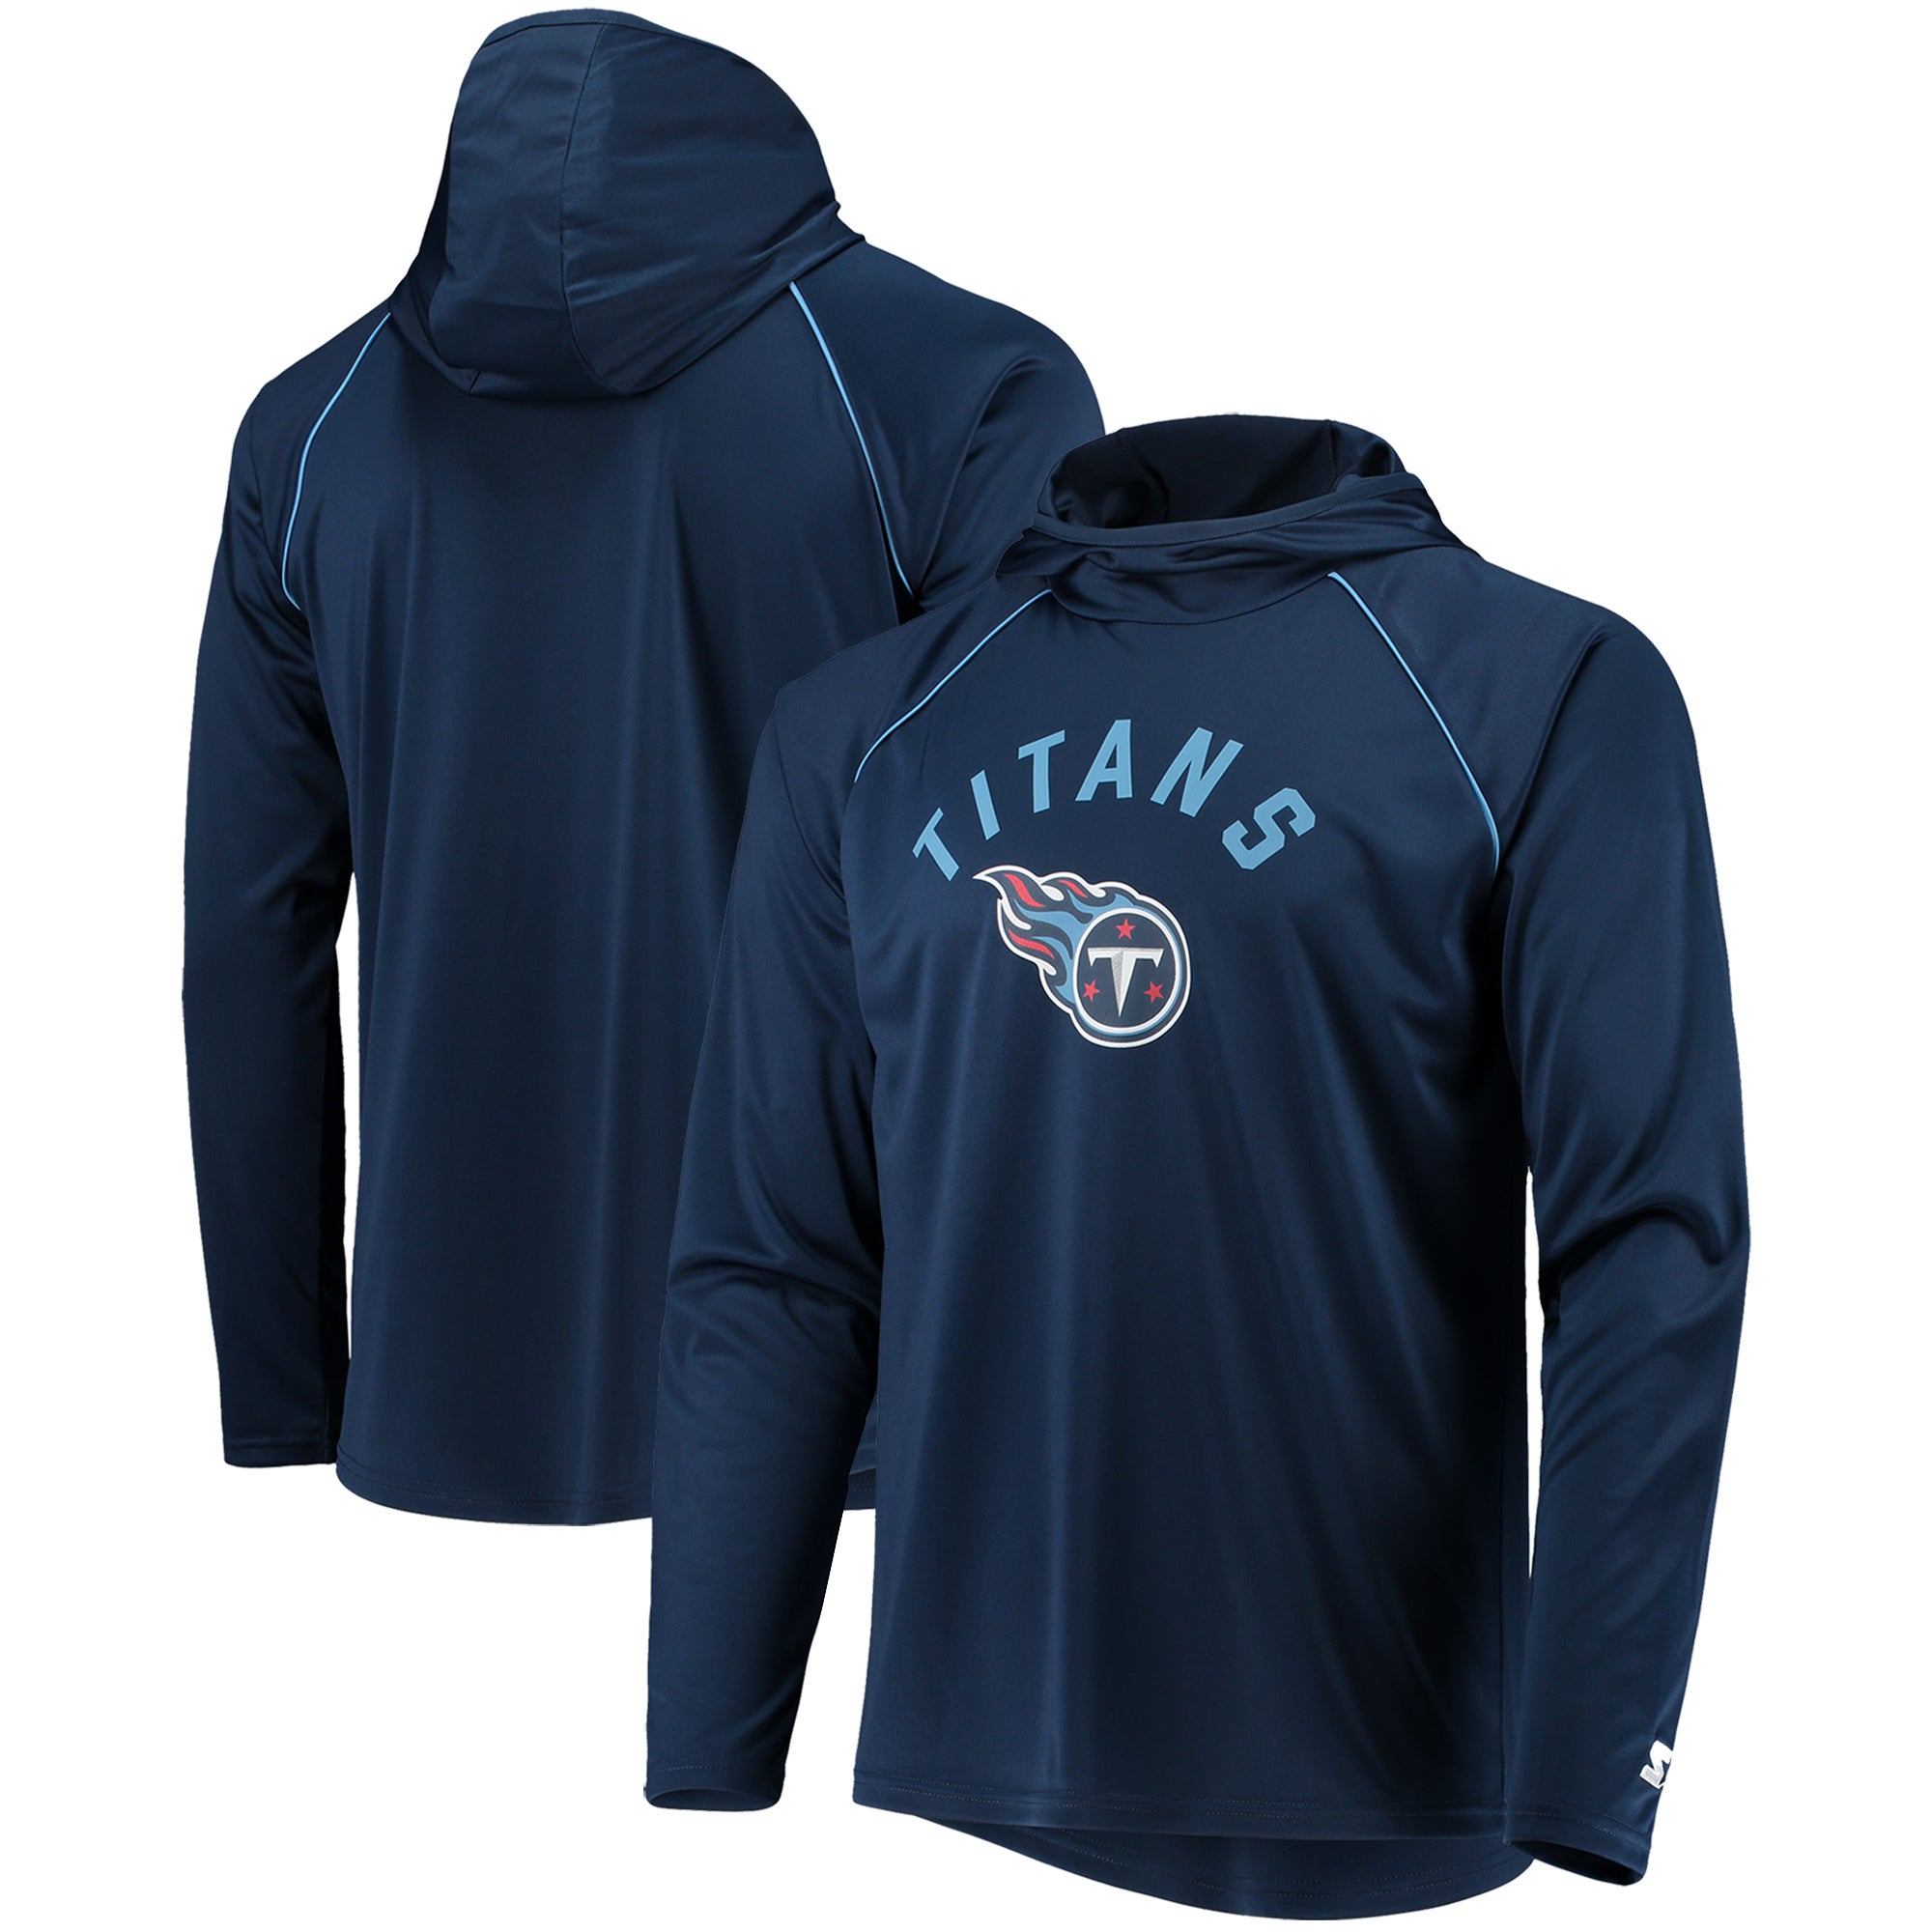 NFL Tennessee Titans Boys' Long Sleeve Performance Hooded Sweatshirt - S